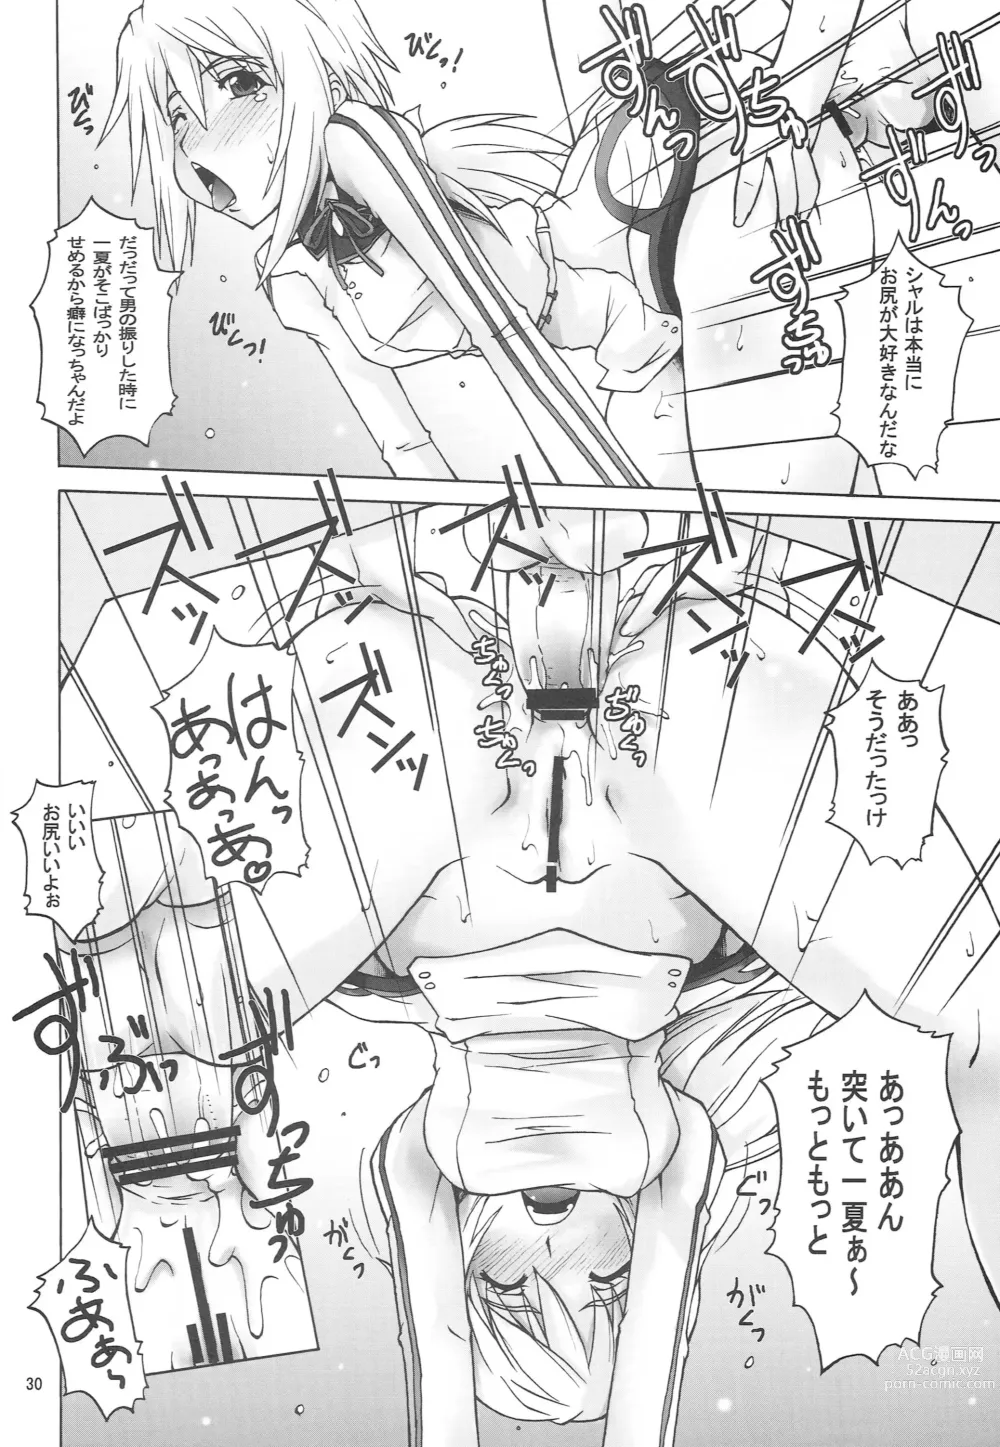 Page 29 of doujinshi CHORO TO LOVE